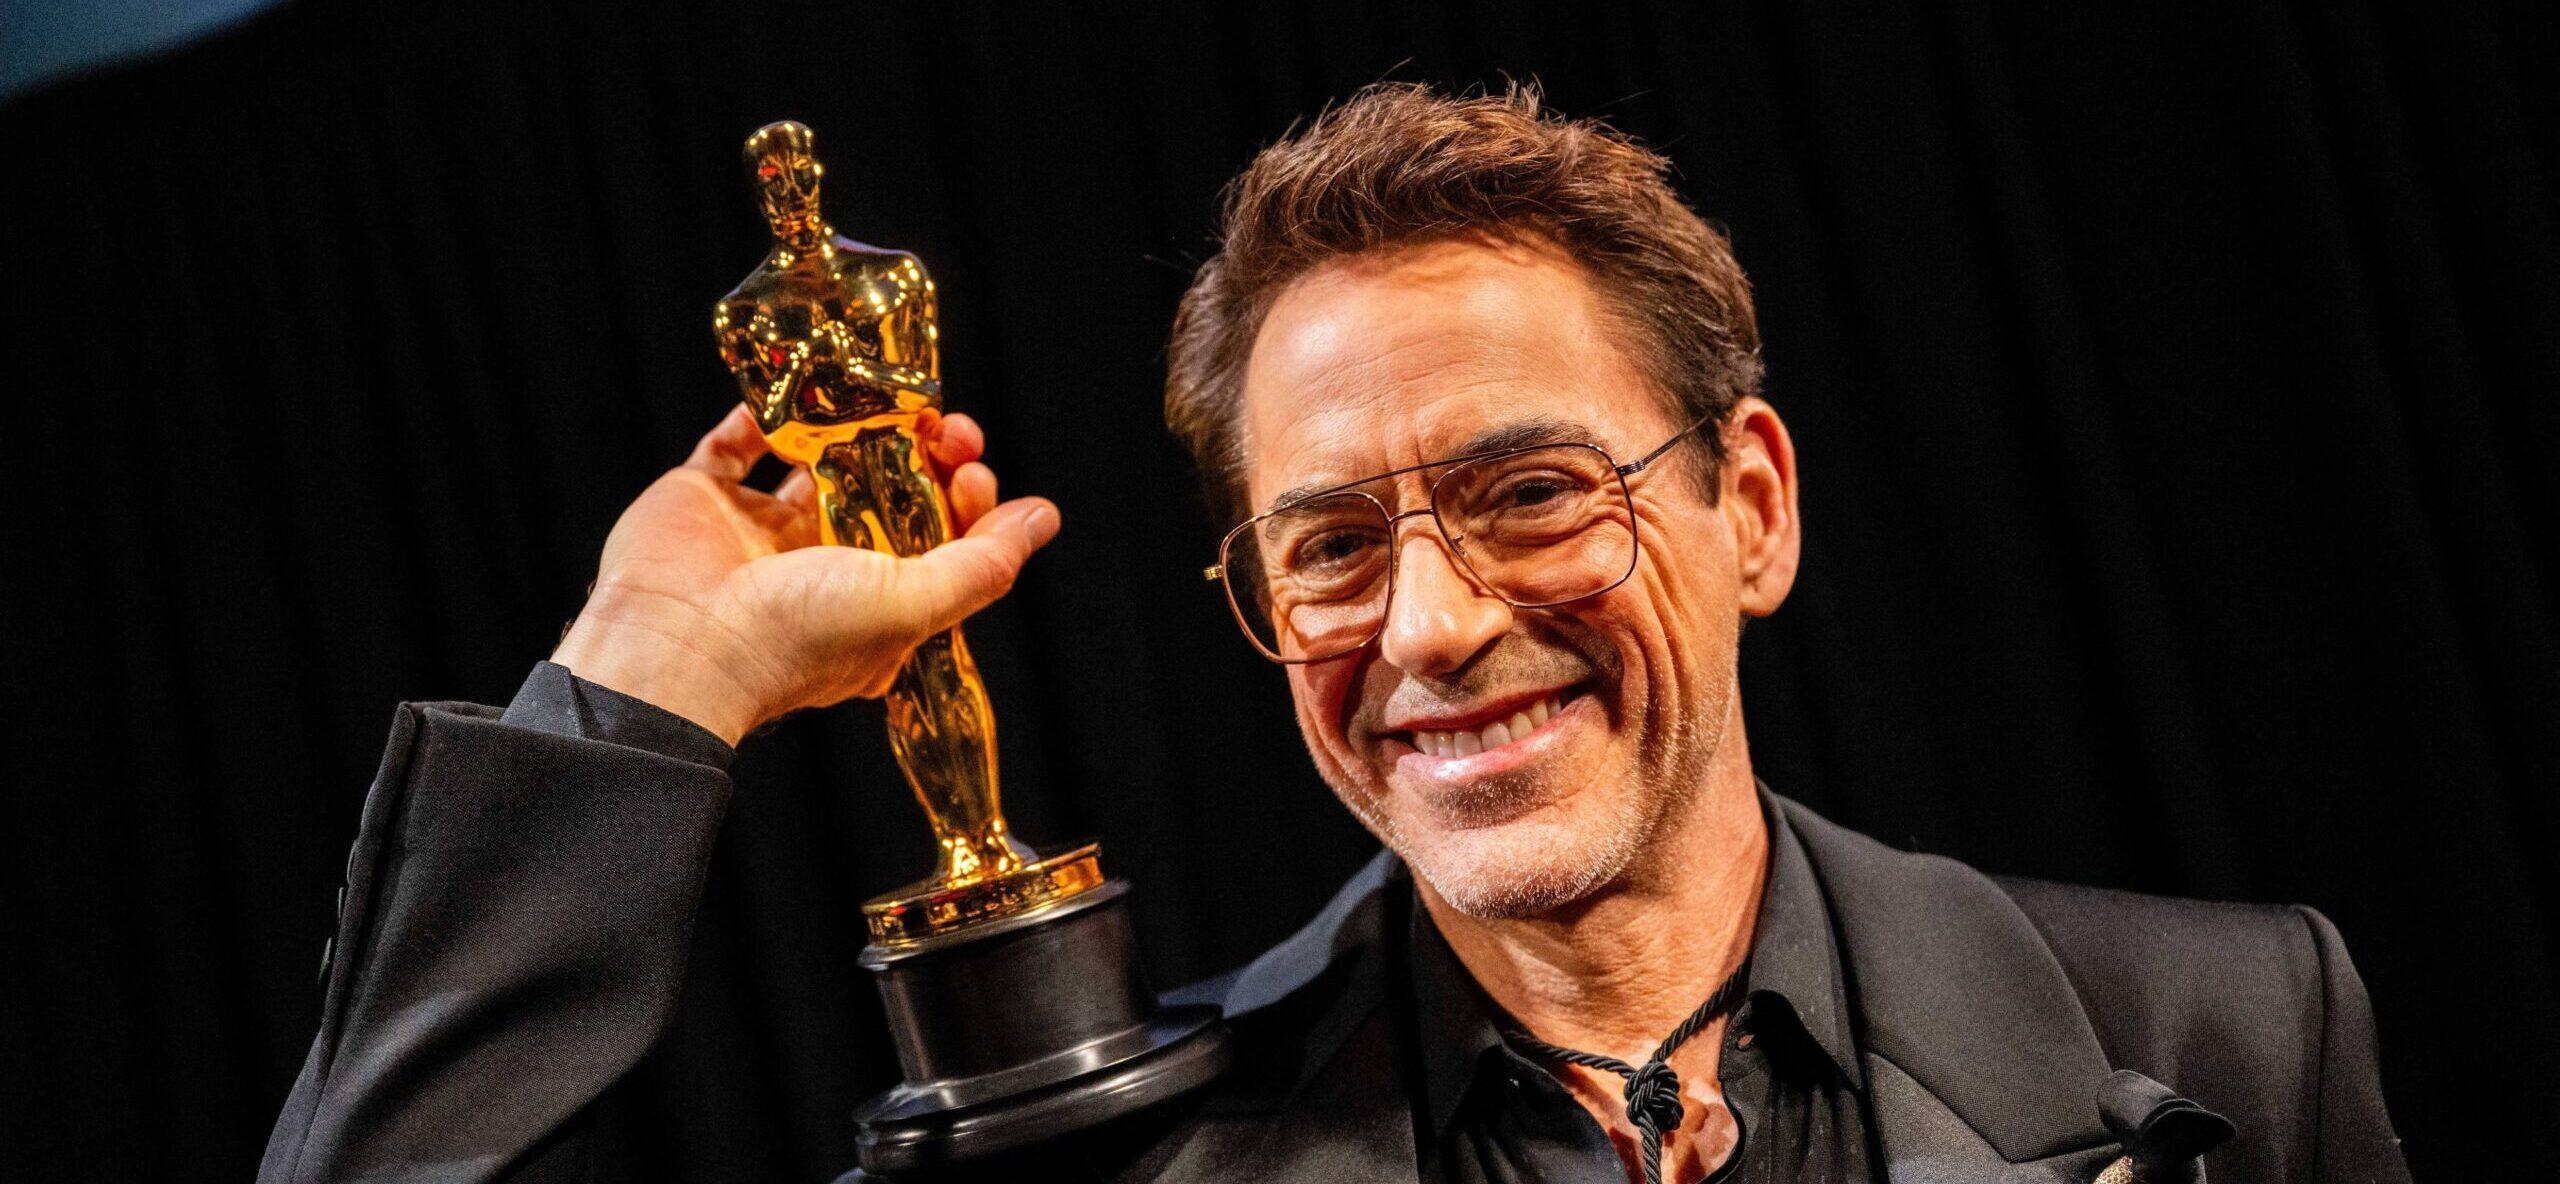 Robert Downey Jr. holding his Oscar trophy